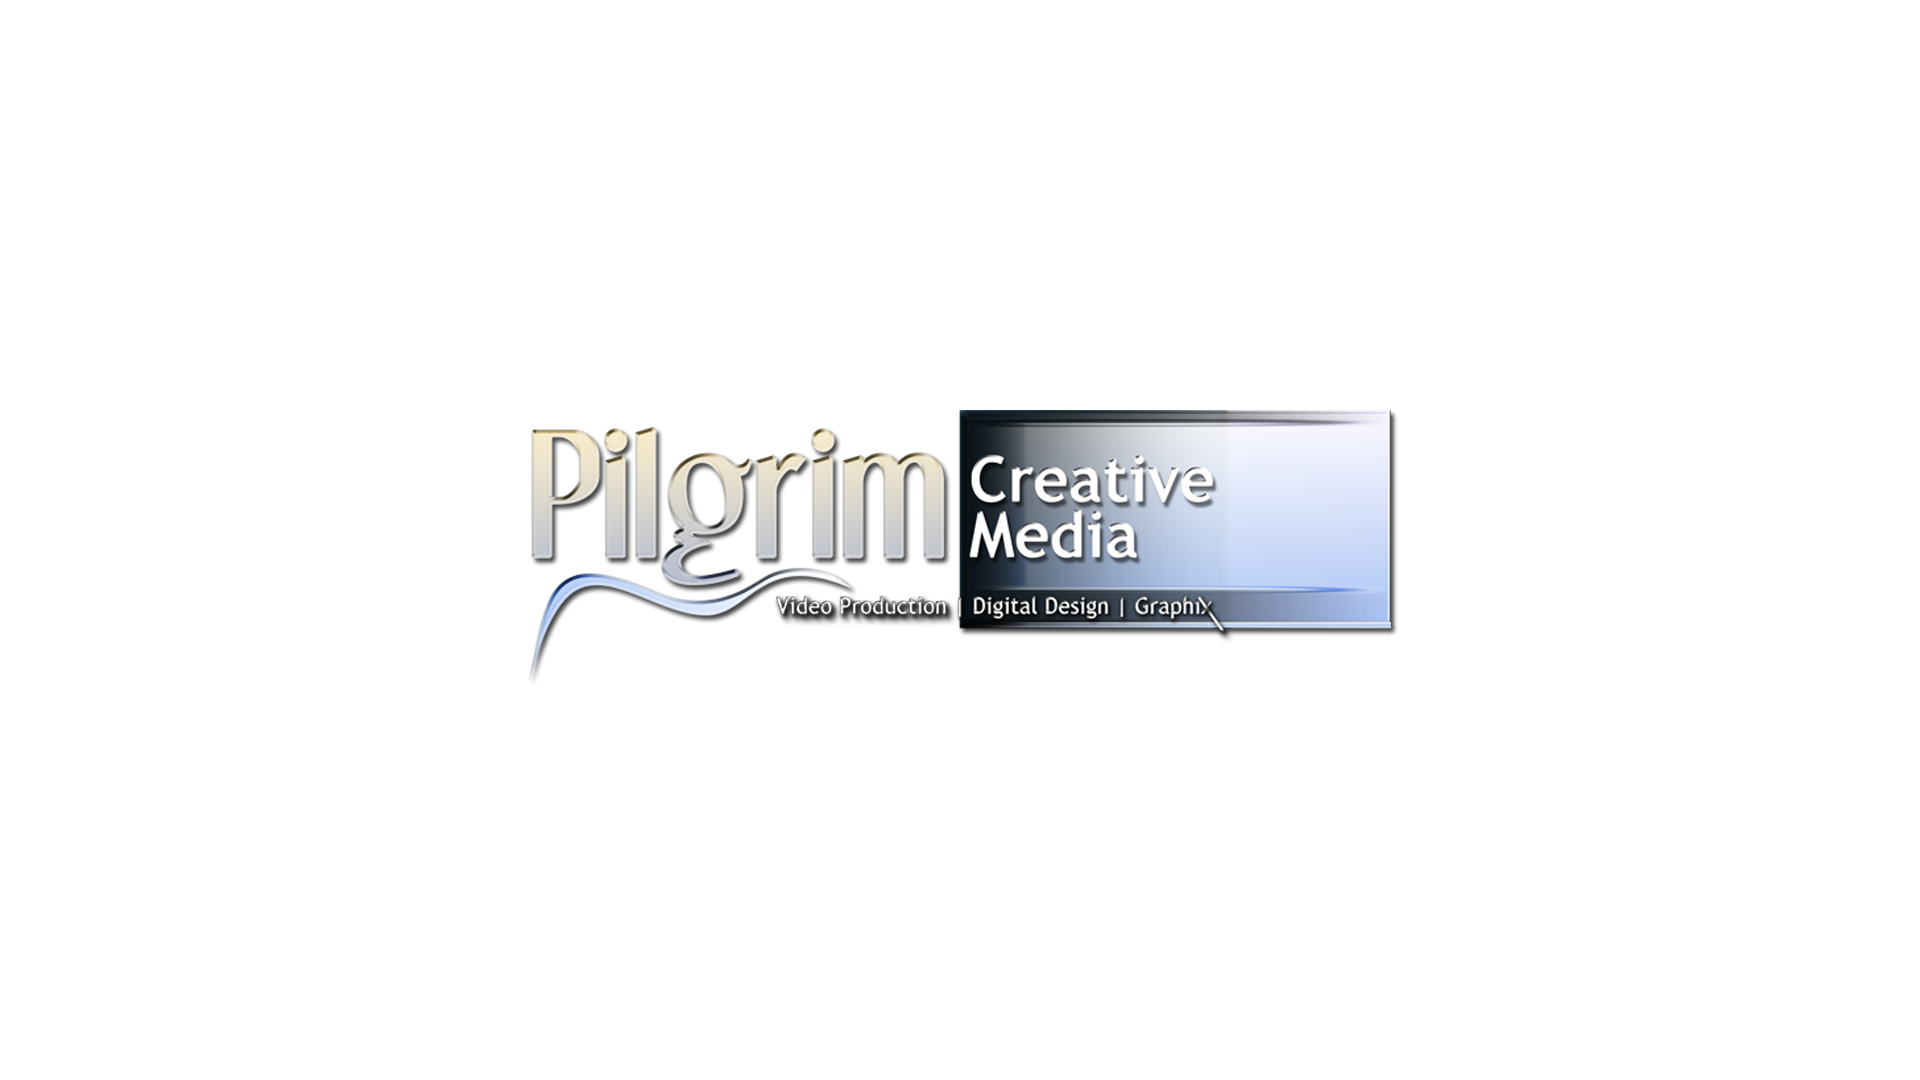 PCM Logo